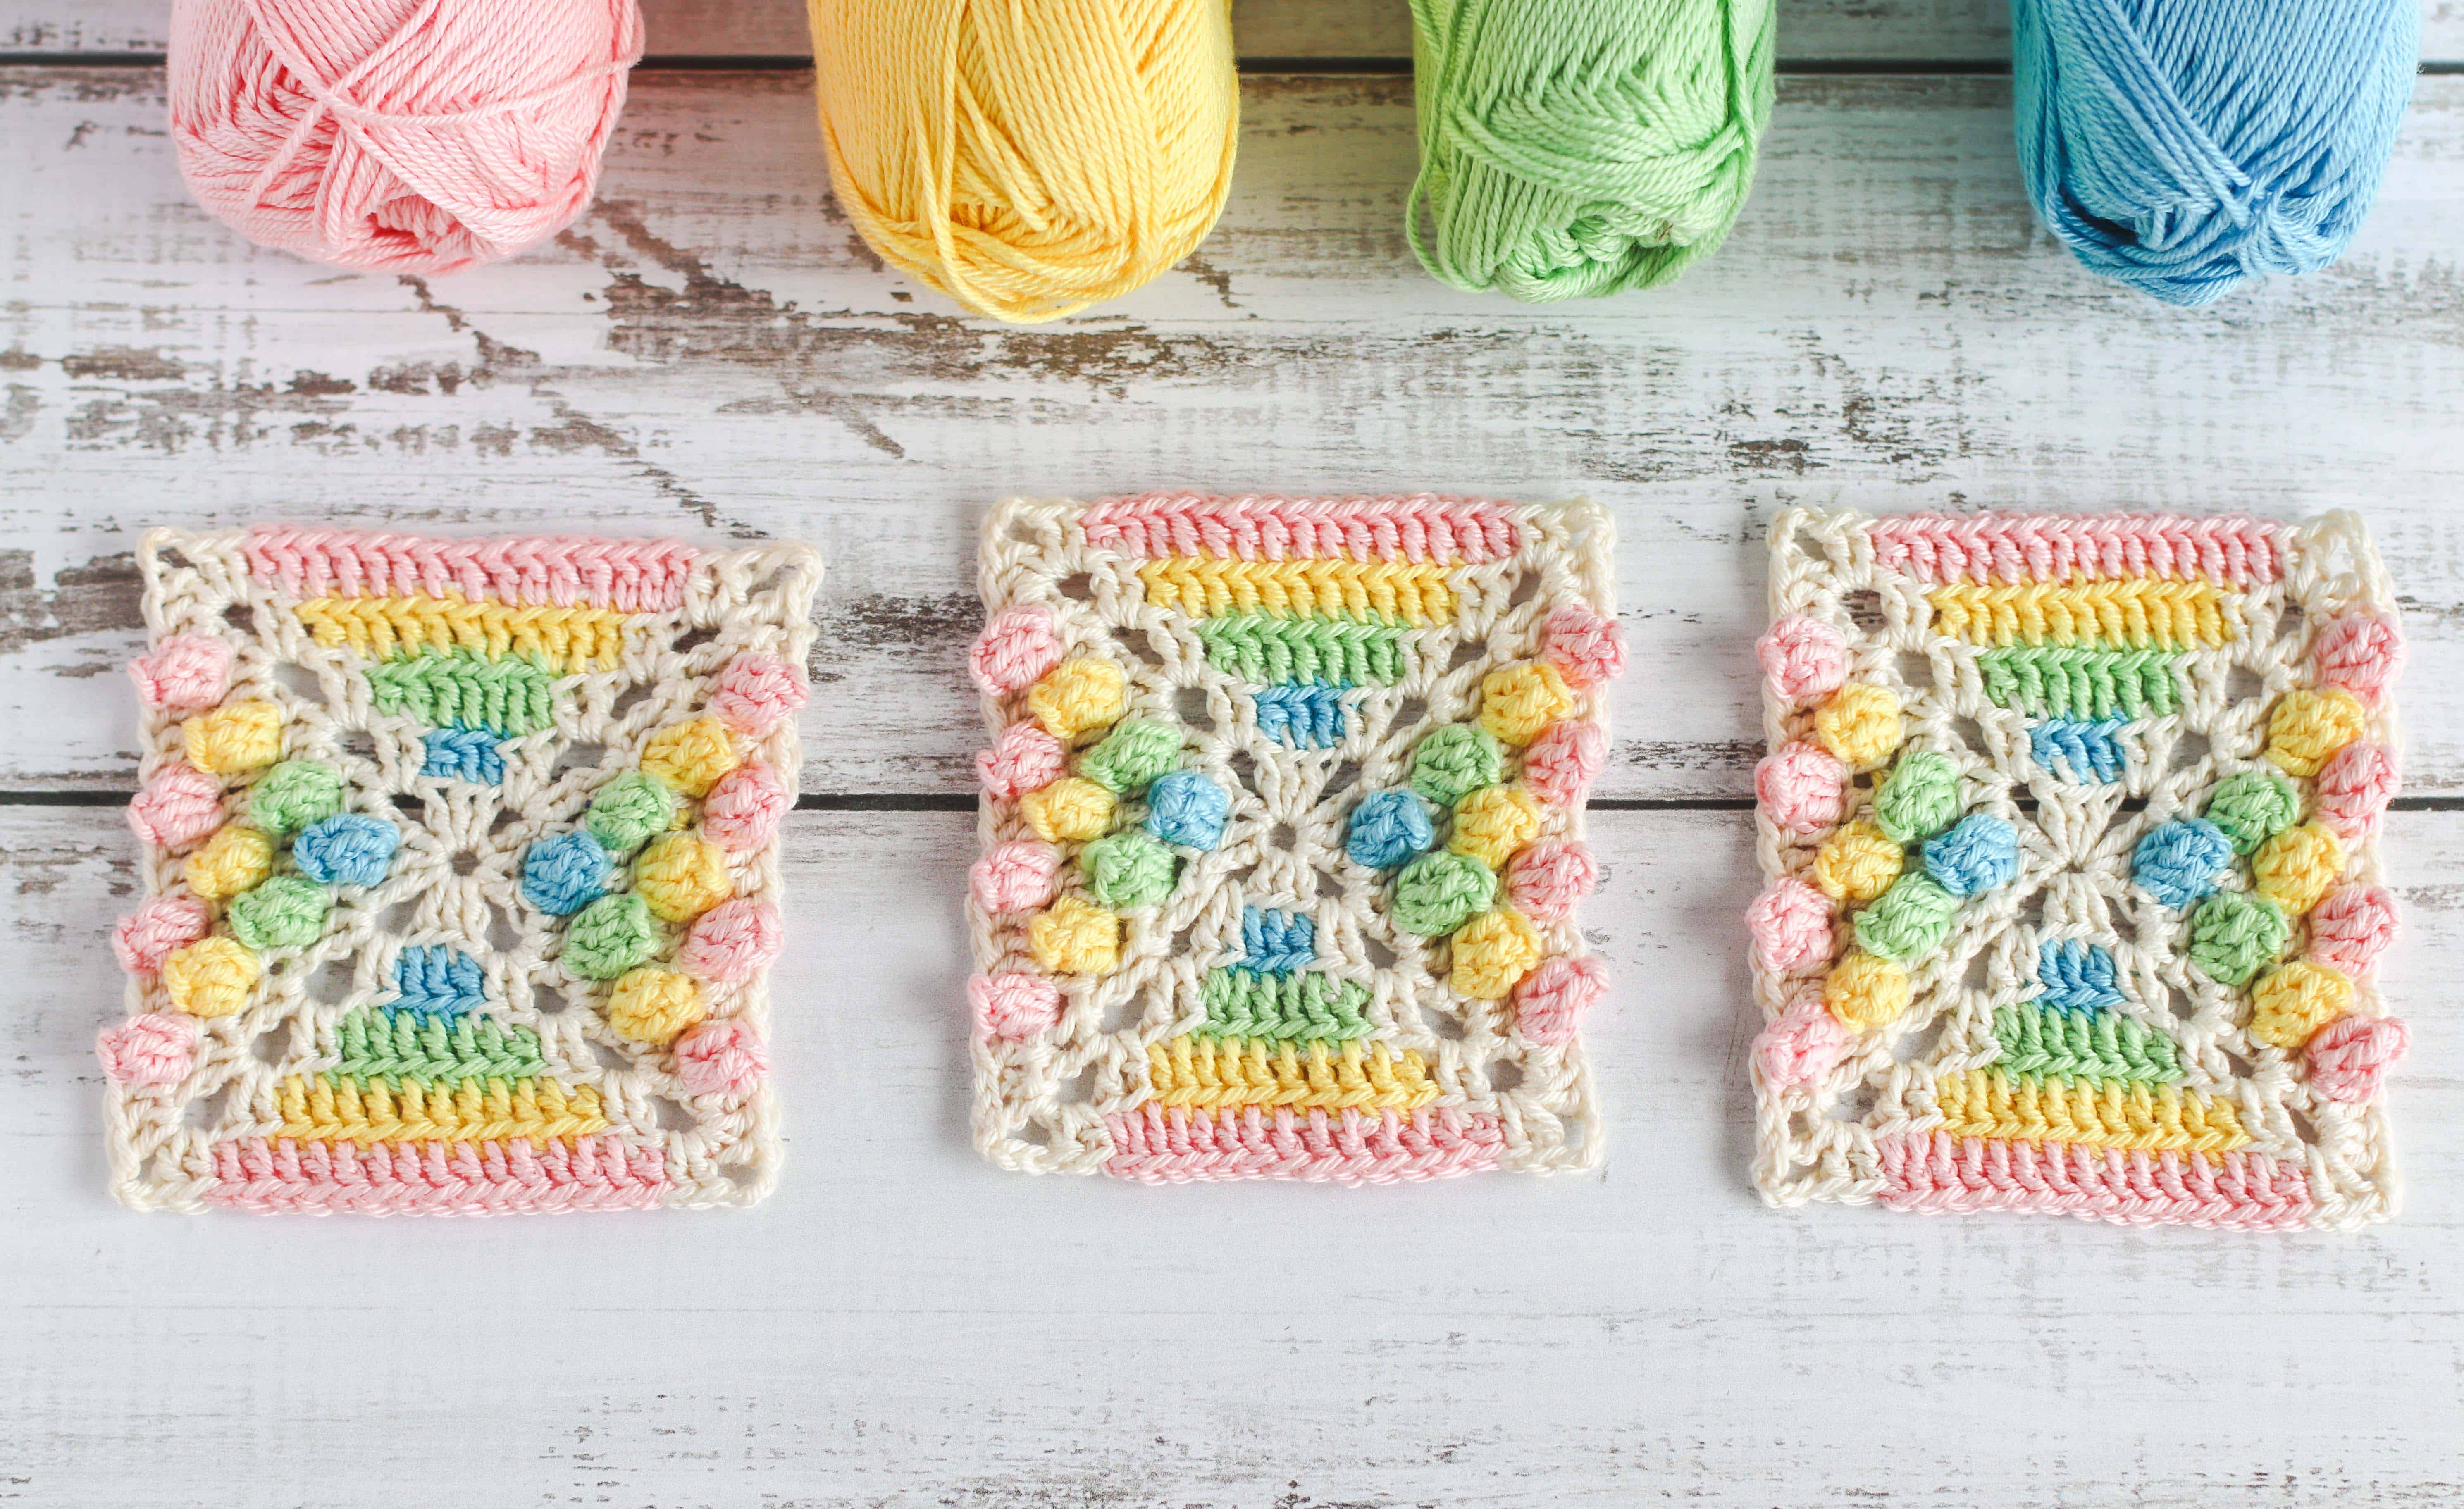 Rainbow Gumdrop Crochet Square | Free crochet pattern